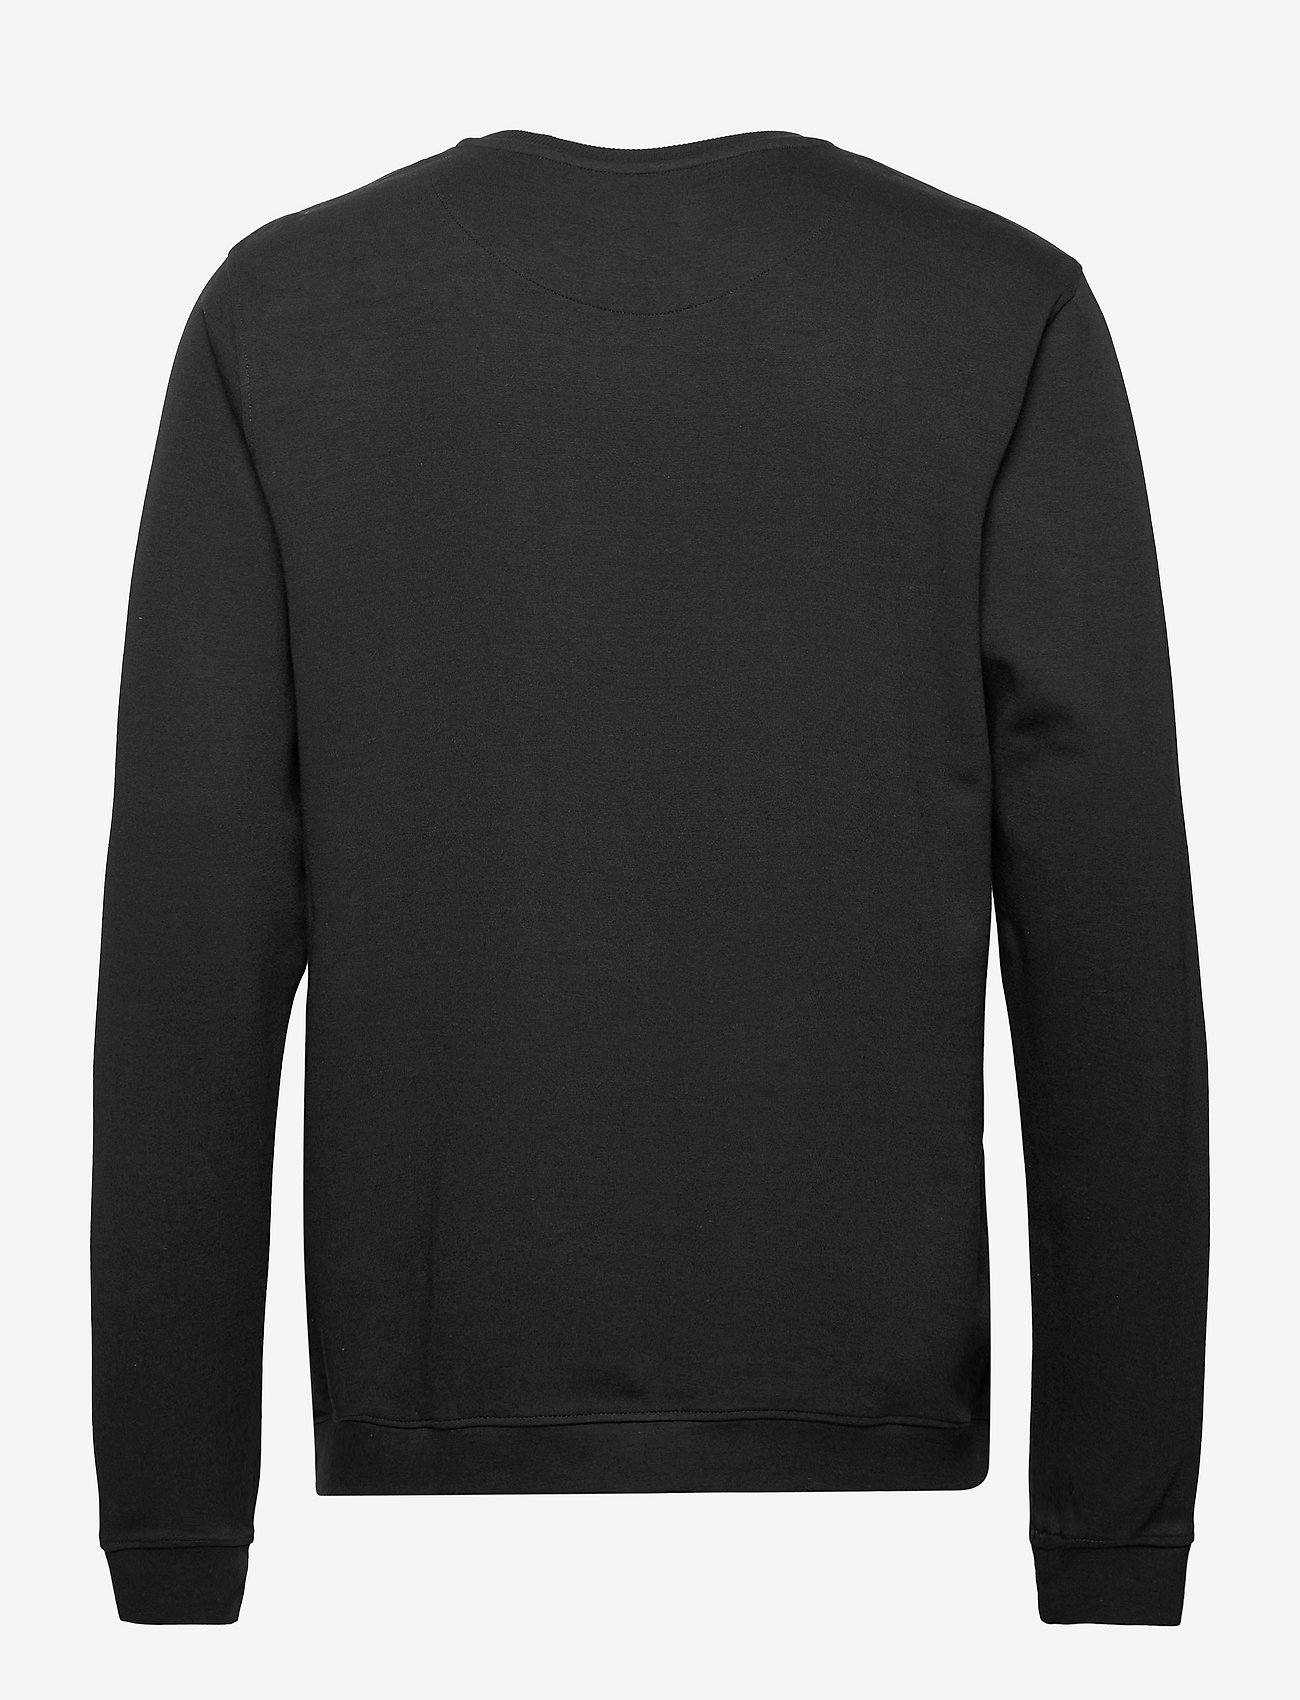 JBS of Denmark - JBS of DK sweatshirt FSC - svetarit - black - 1